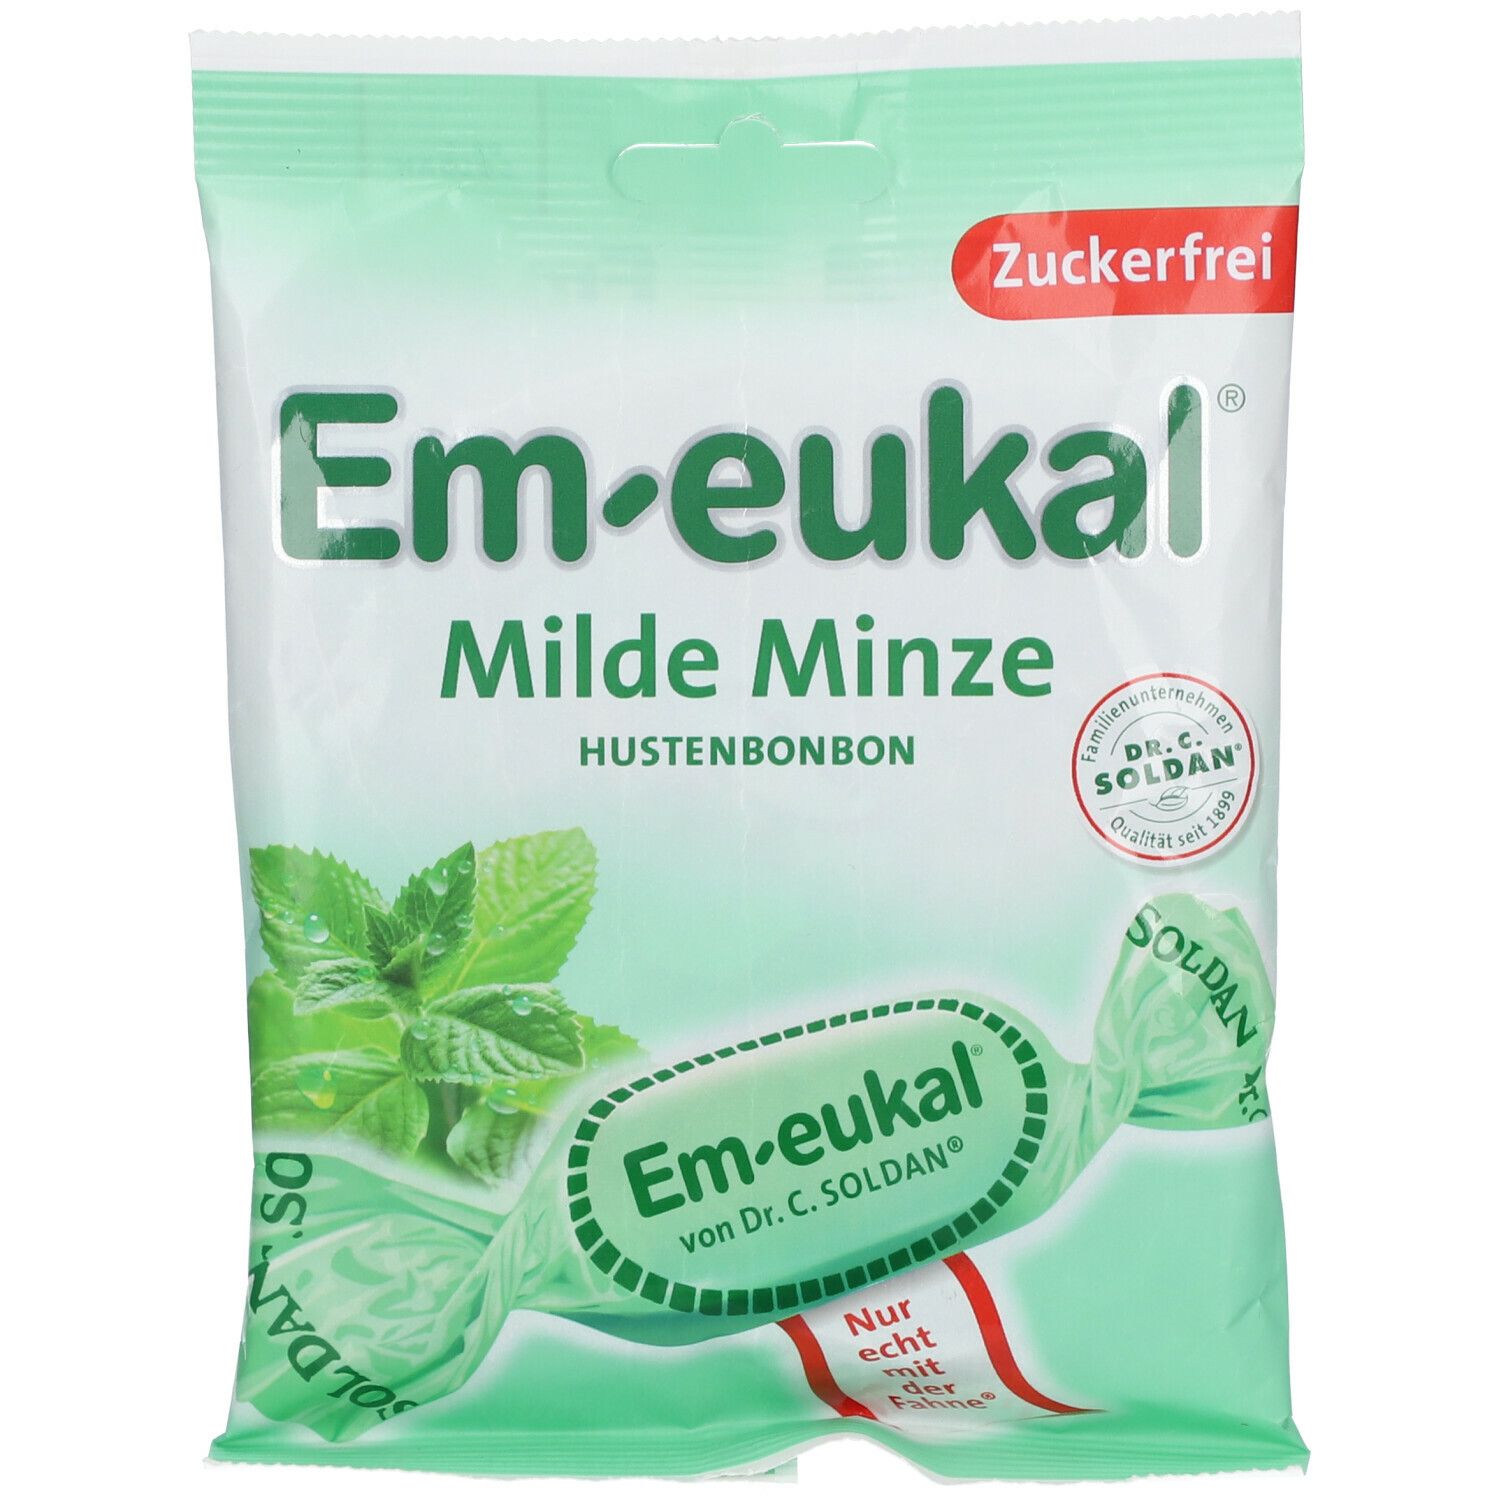 Em-eukal® Milde Minze